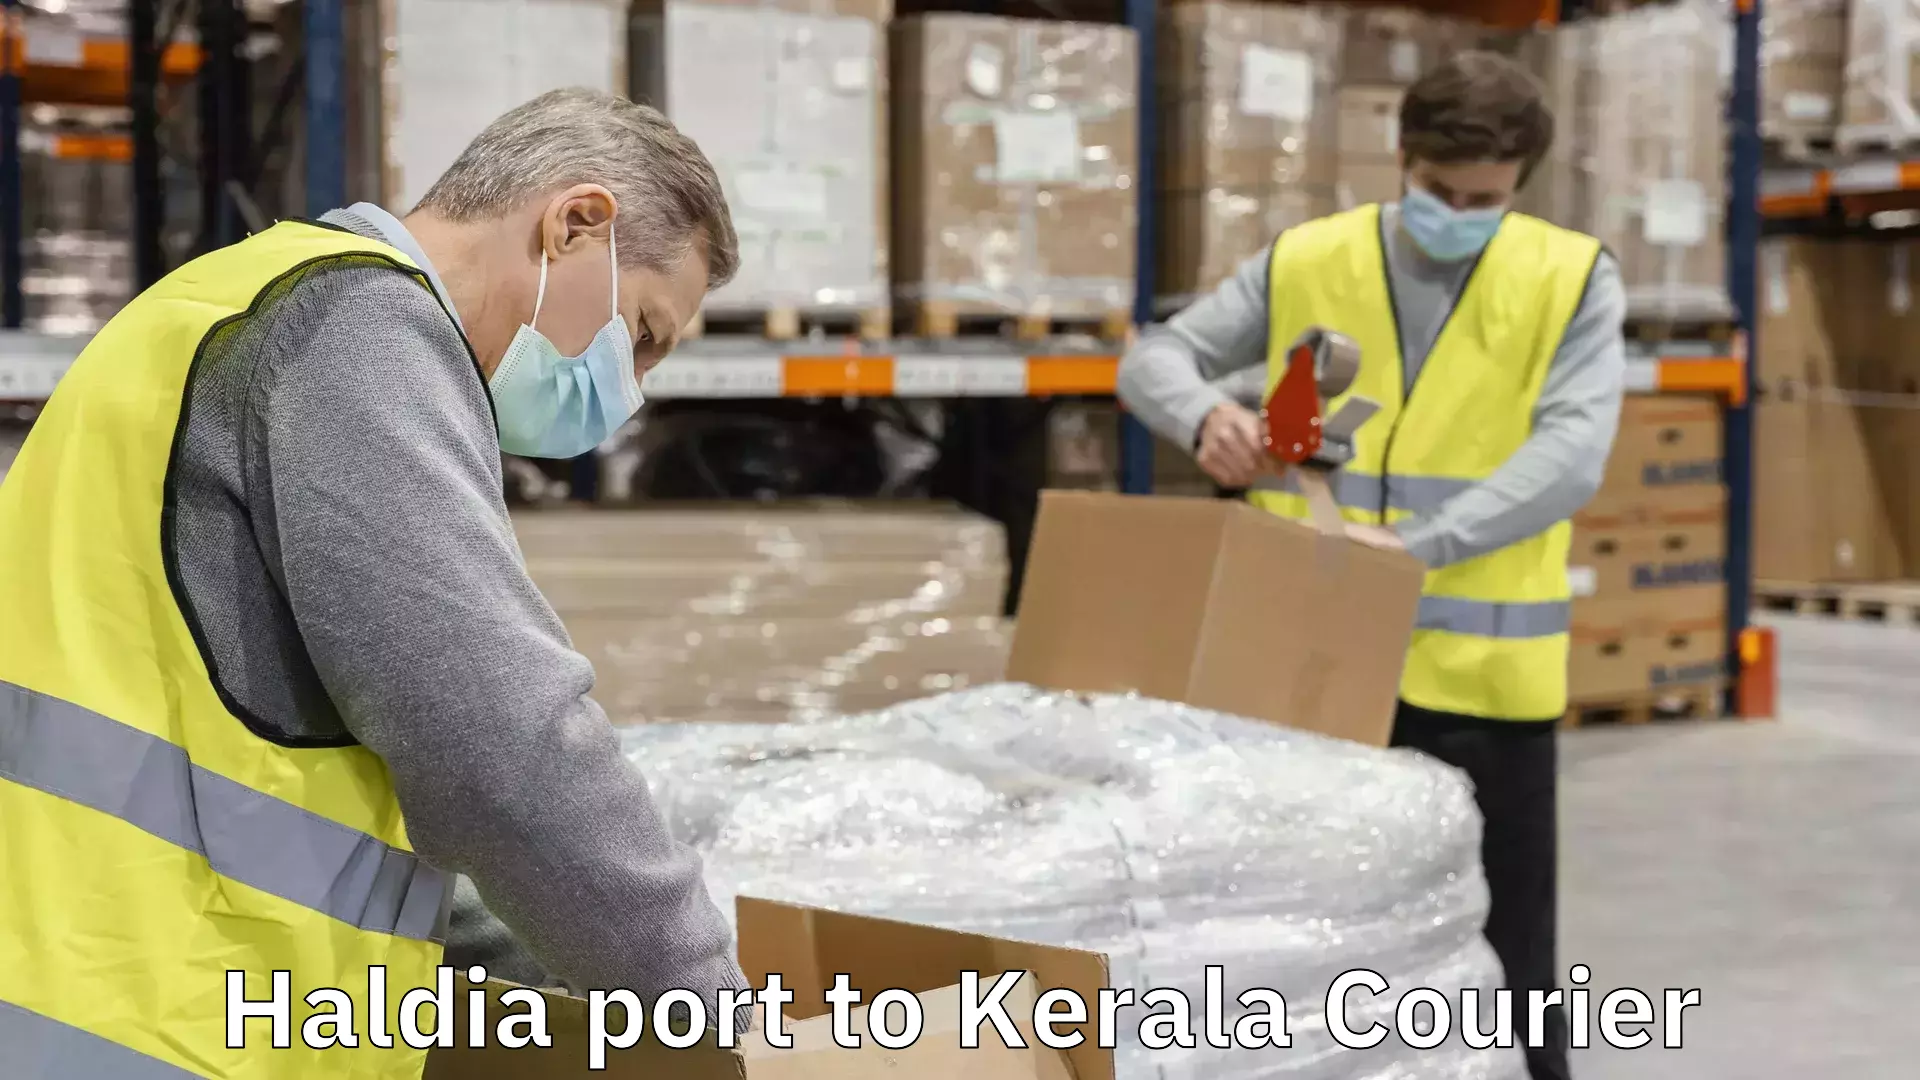 Courier insurance Haldia port to Cochin Port Kochi